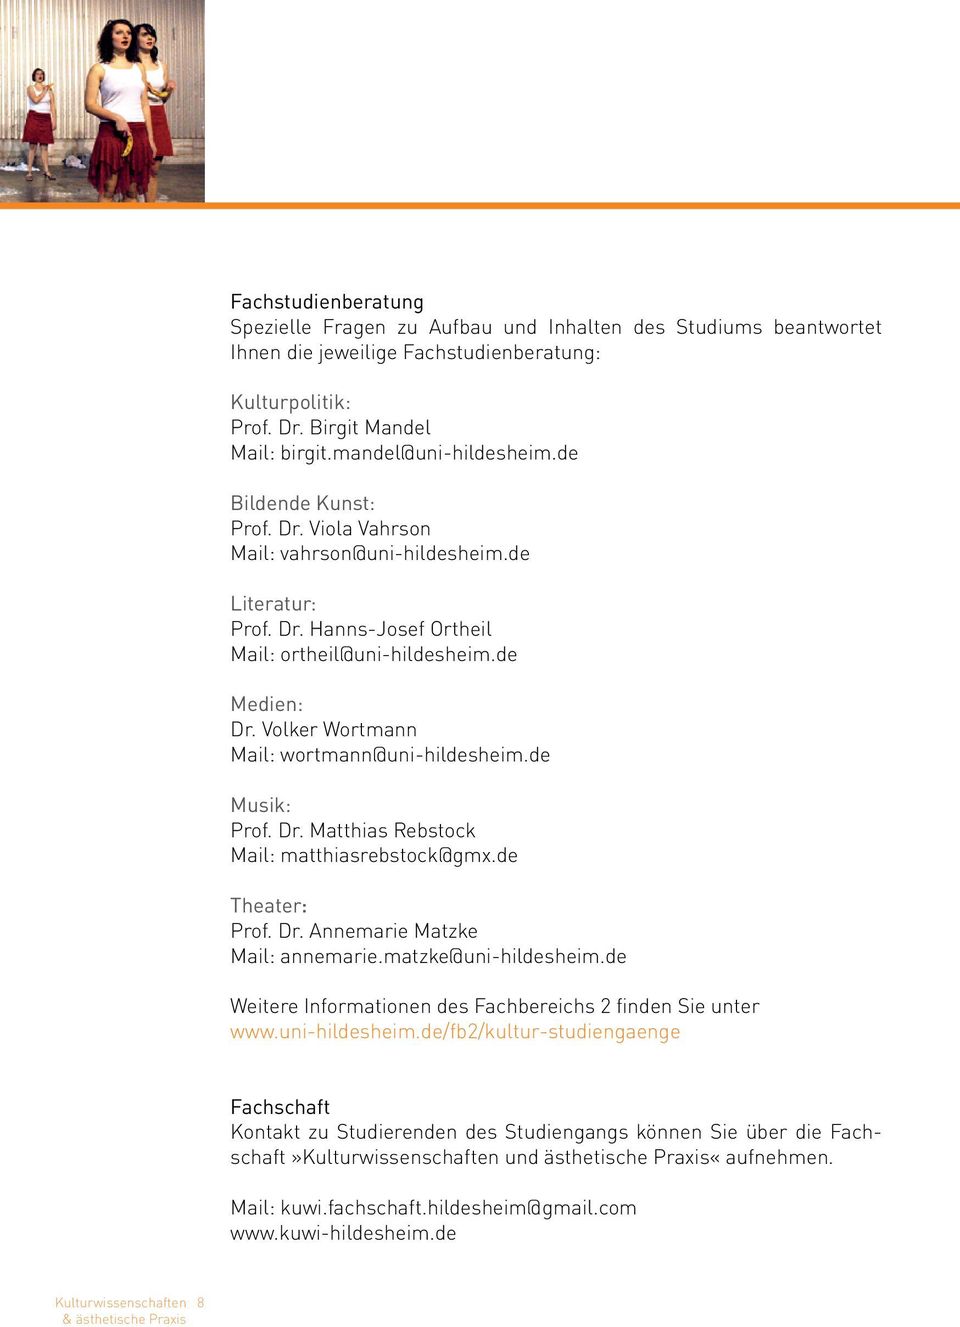 Volker Wortmann Mail: wortmann@uni-hildesheim.de Musik: Prof. Dr. Matthias Rebstock Mail: matthiasrebstock@gmx.de Theater: Prof. Dr. Annemarie Matzke Mail: annemarie.matzke@uni-hildesheim.